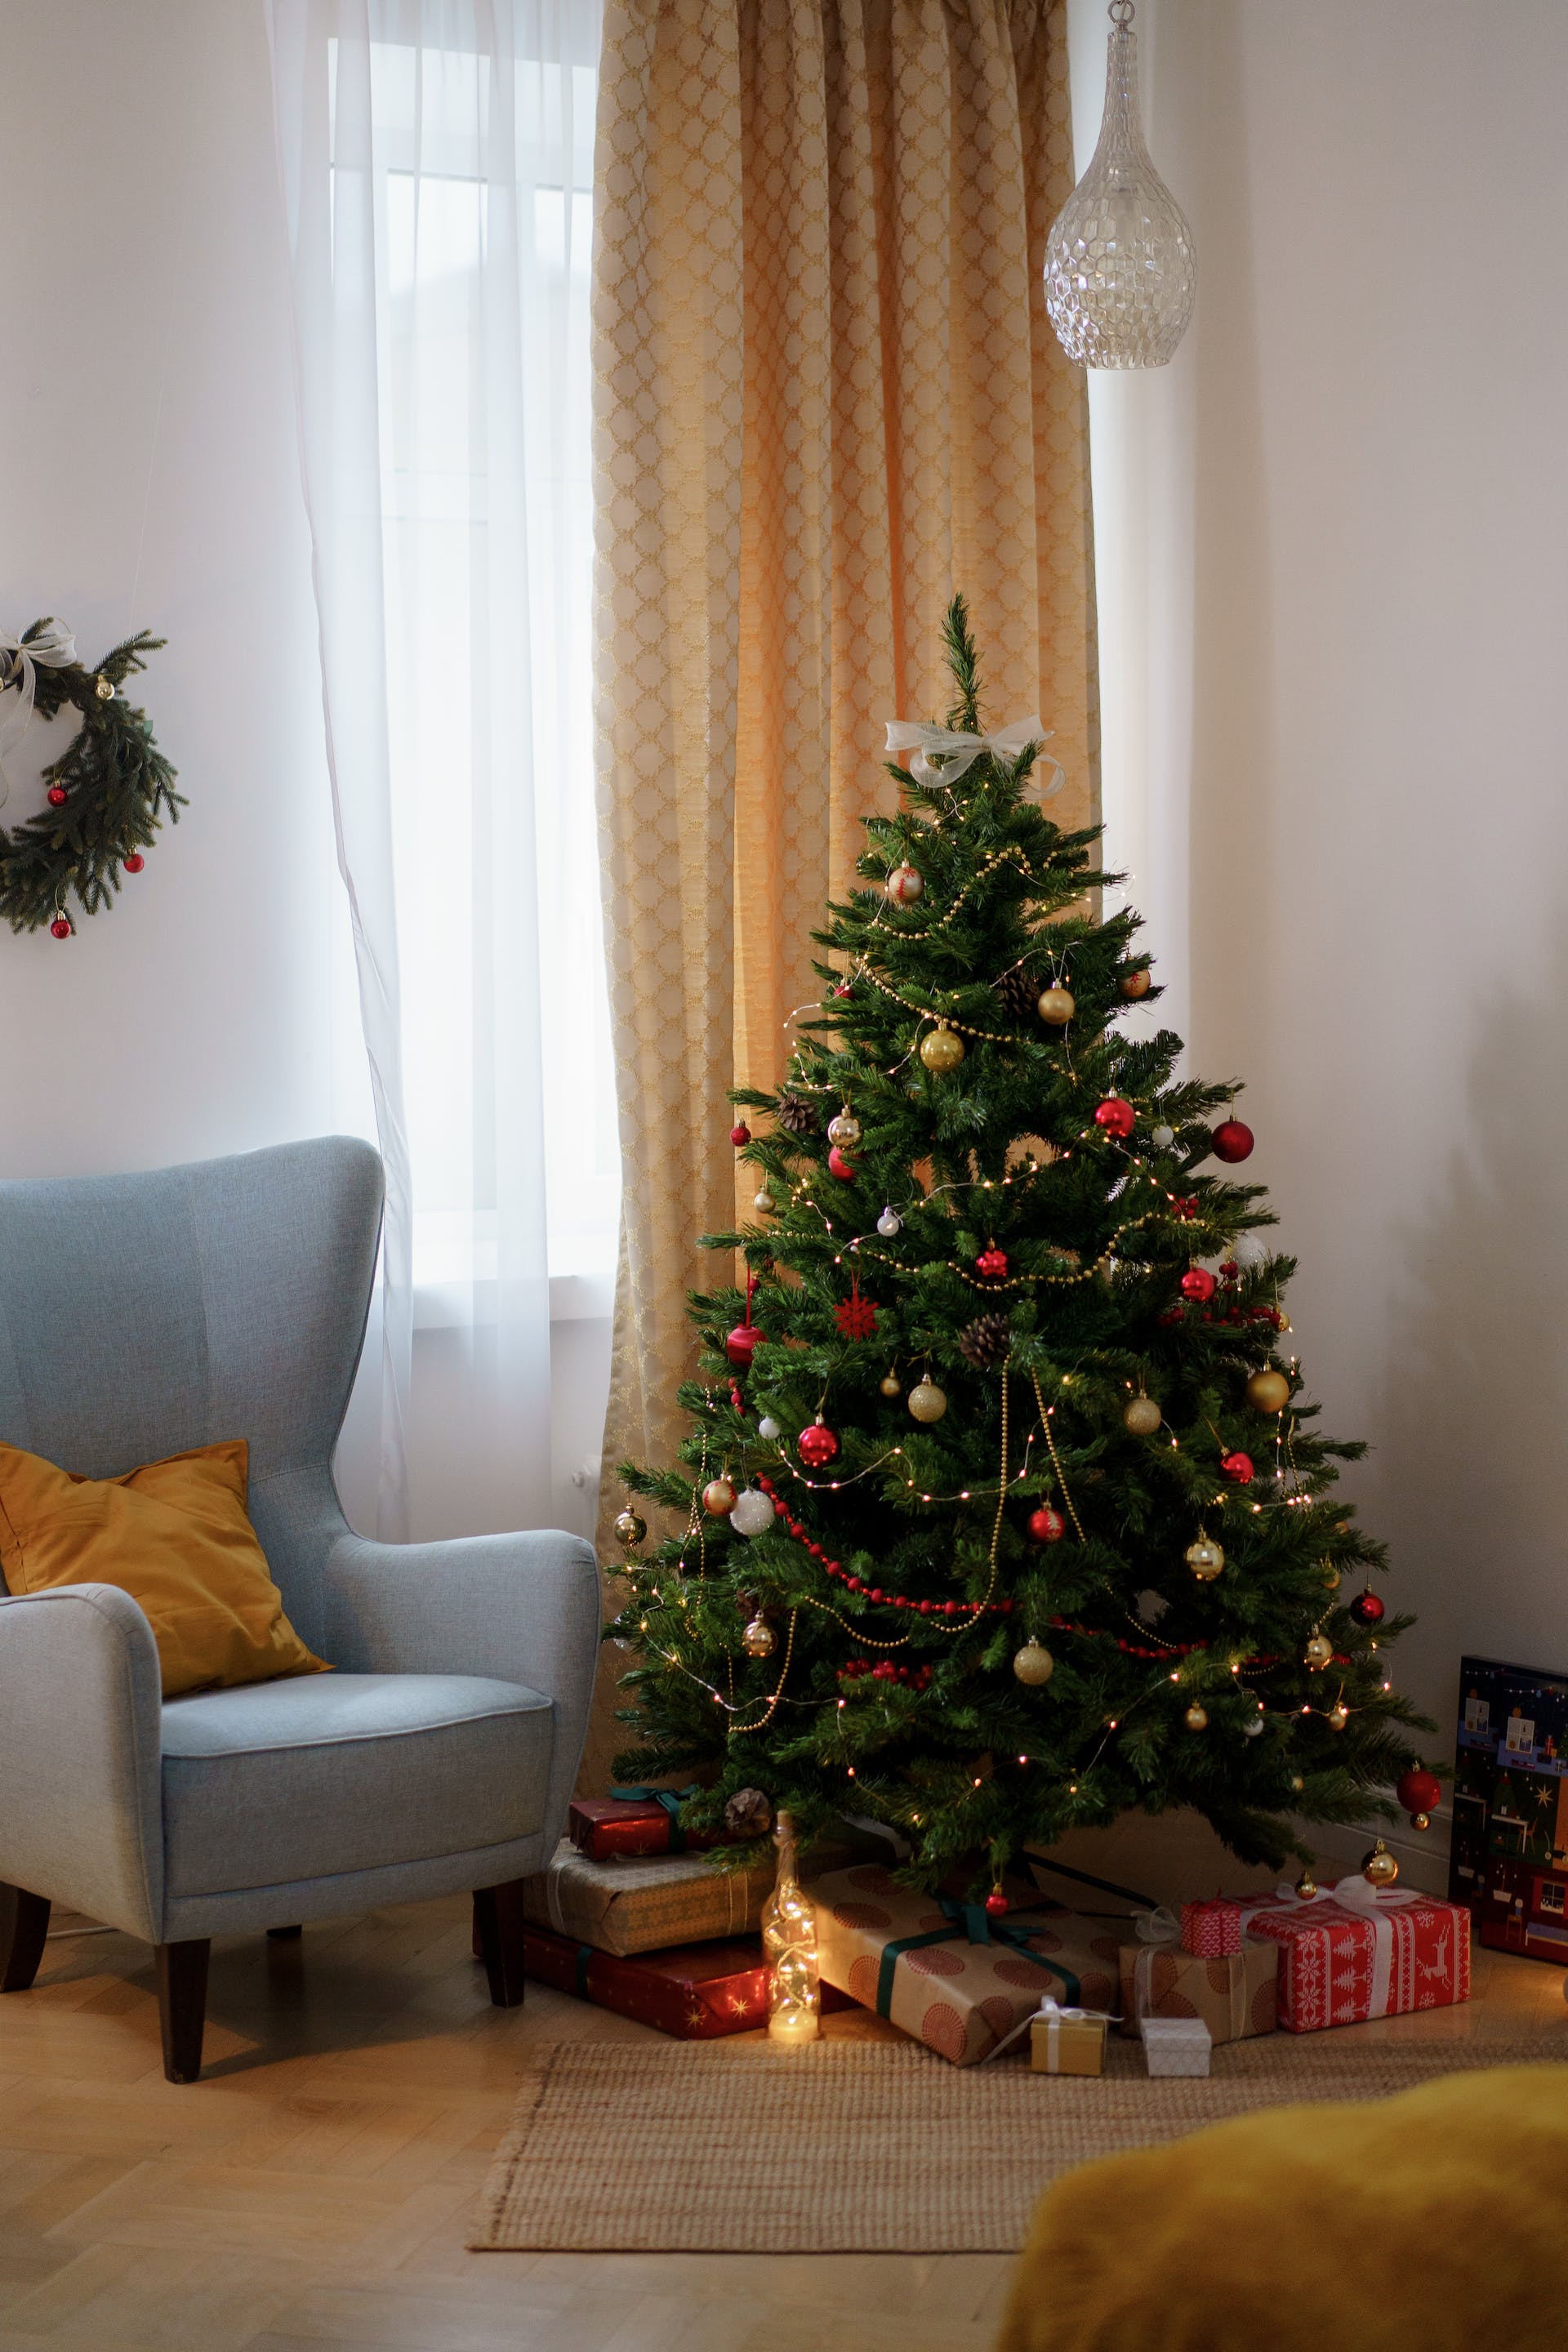 A Christmas tree | Source: Pexels